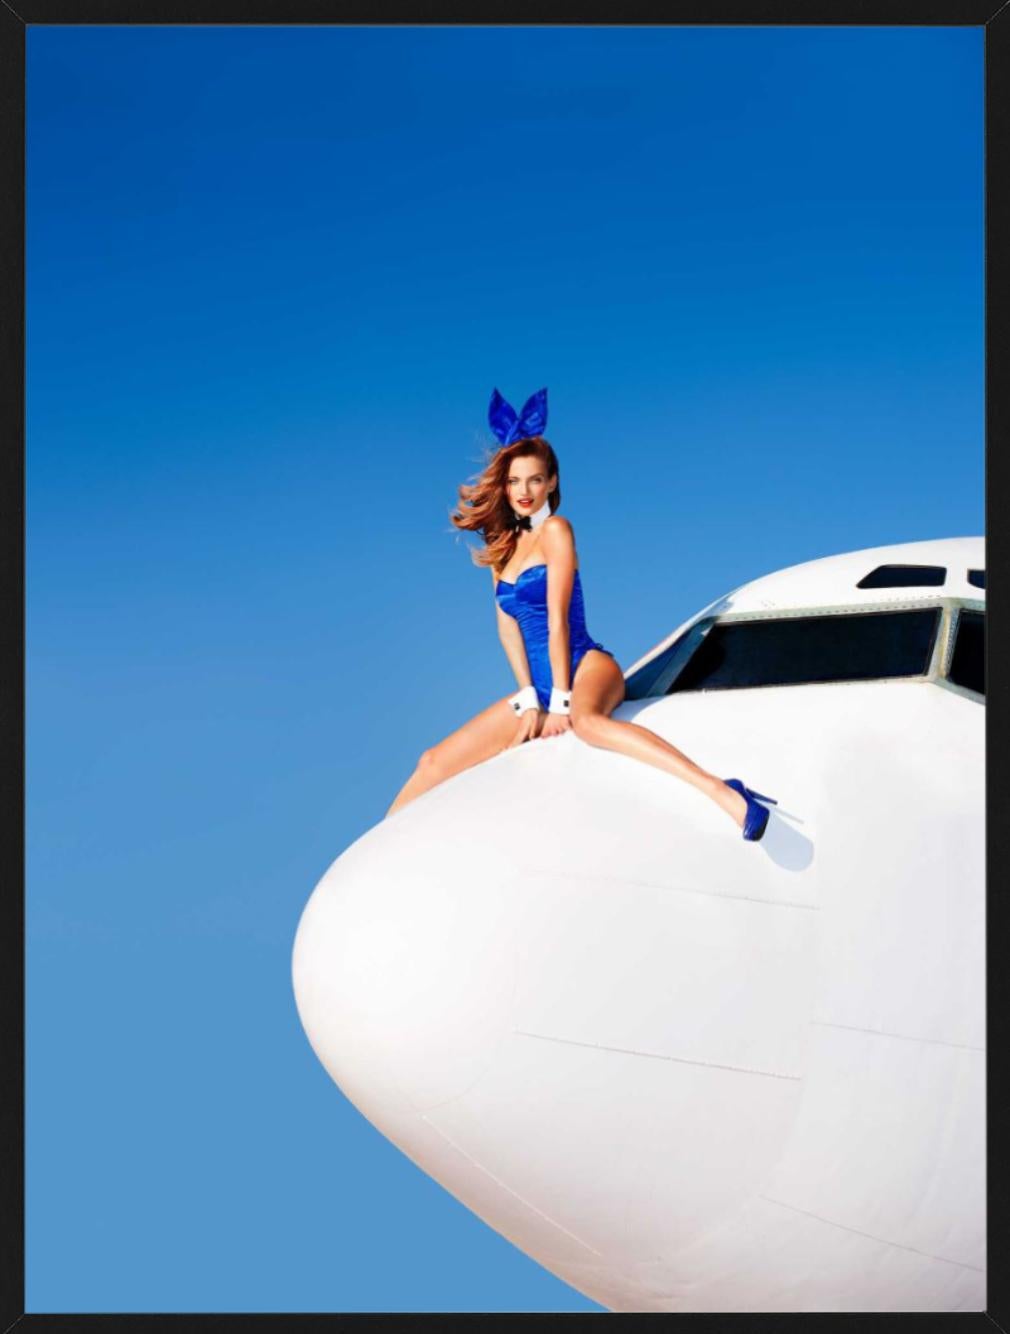 Flight TK75 - Model in bunny costume sitting on Plane, fine art photography 2014 - Photograph by Tony Kelly